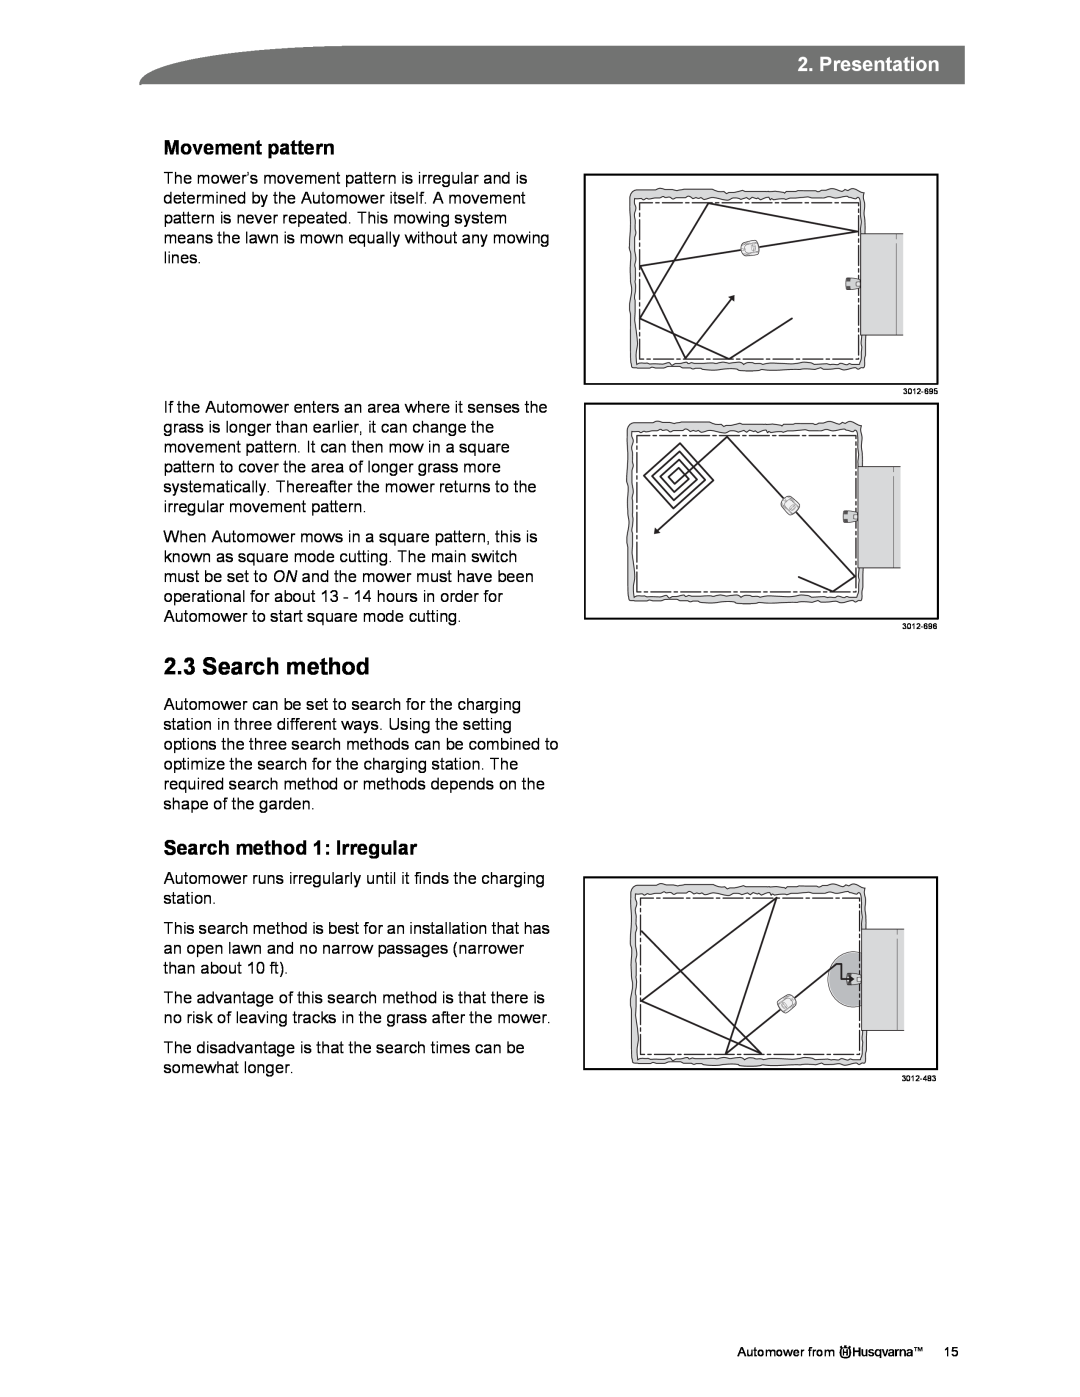 Husqvarna Automower manual Movement pattern, Search method 1: Irregular, Presentation 